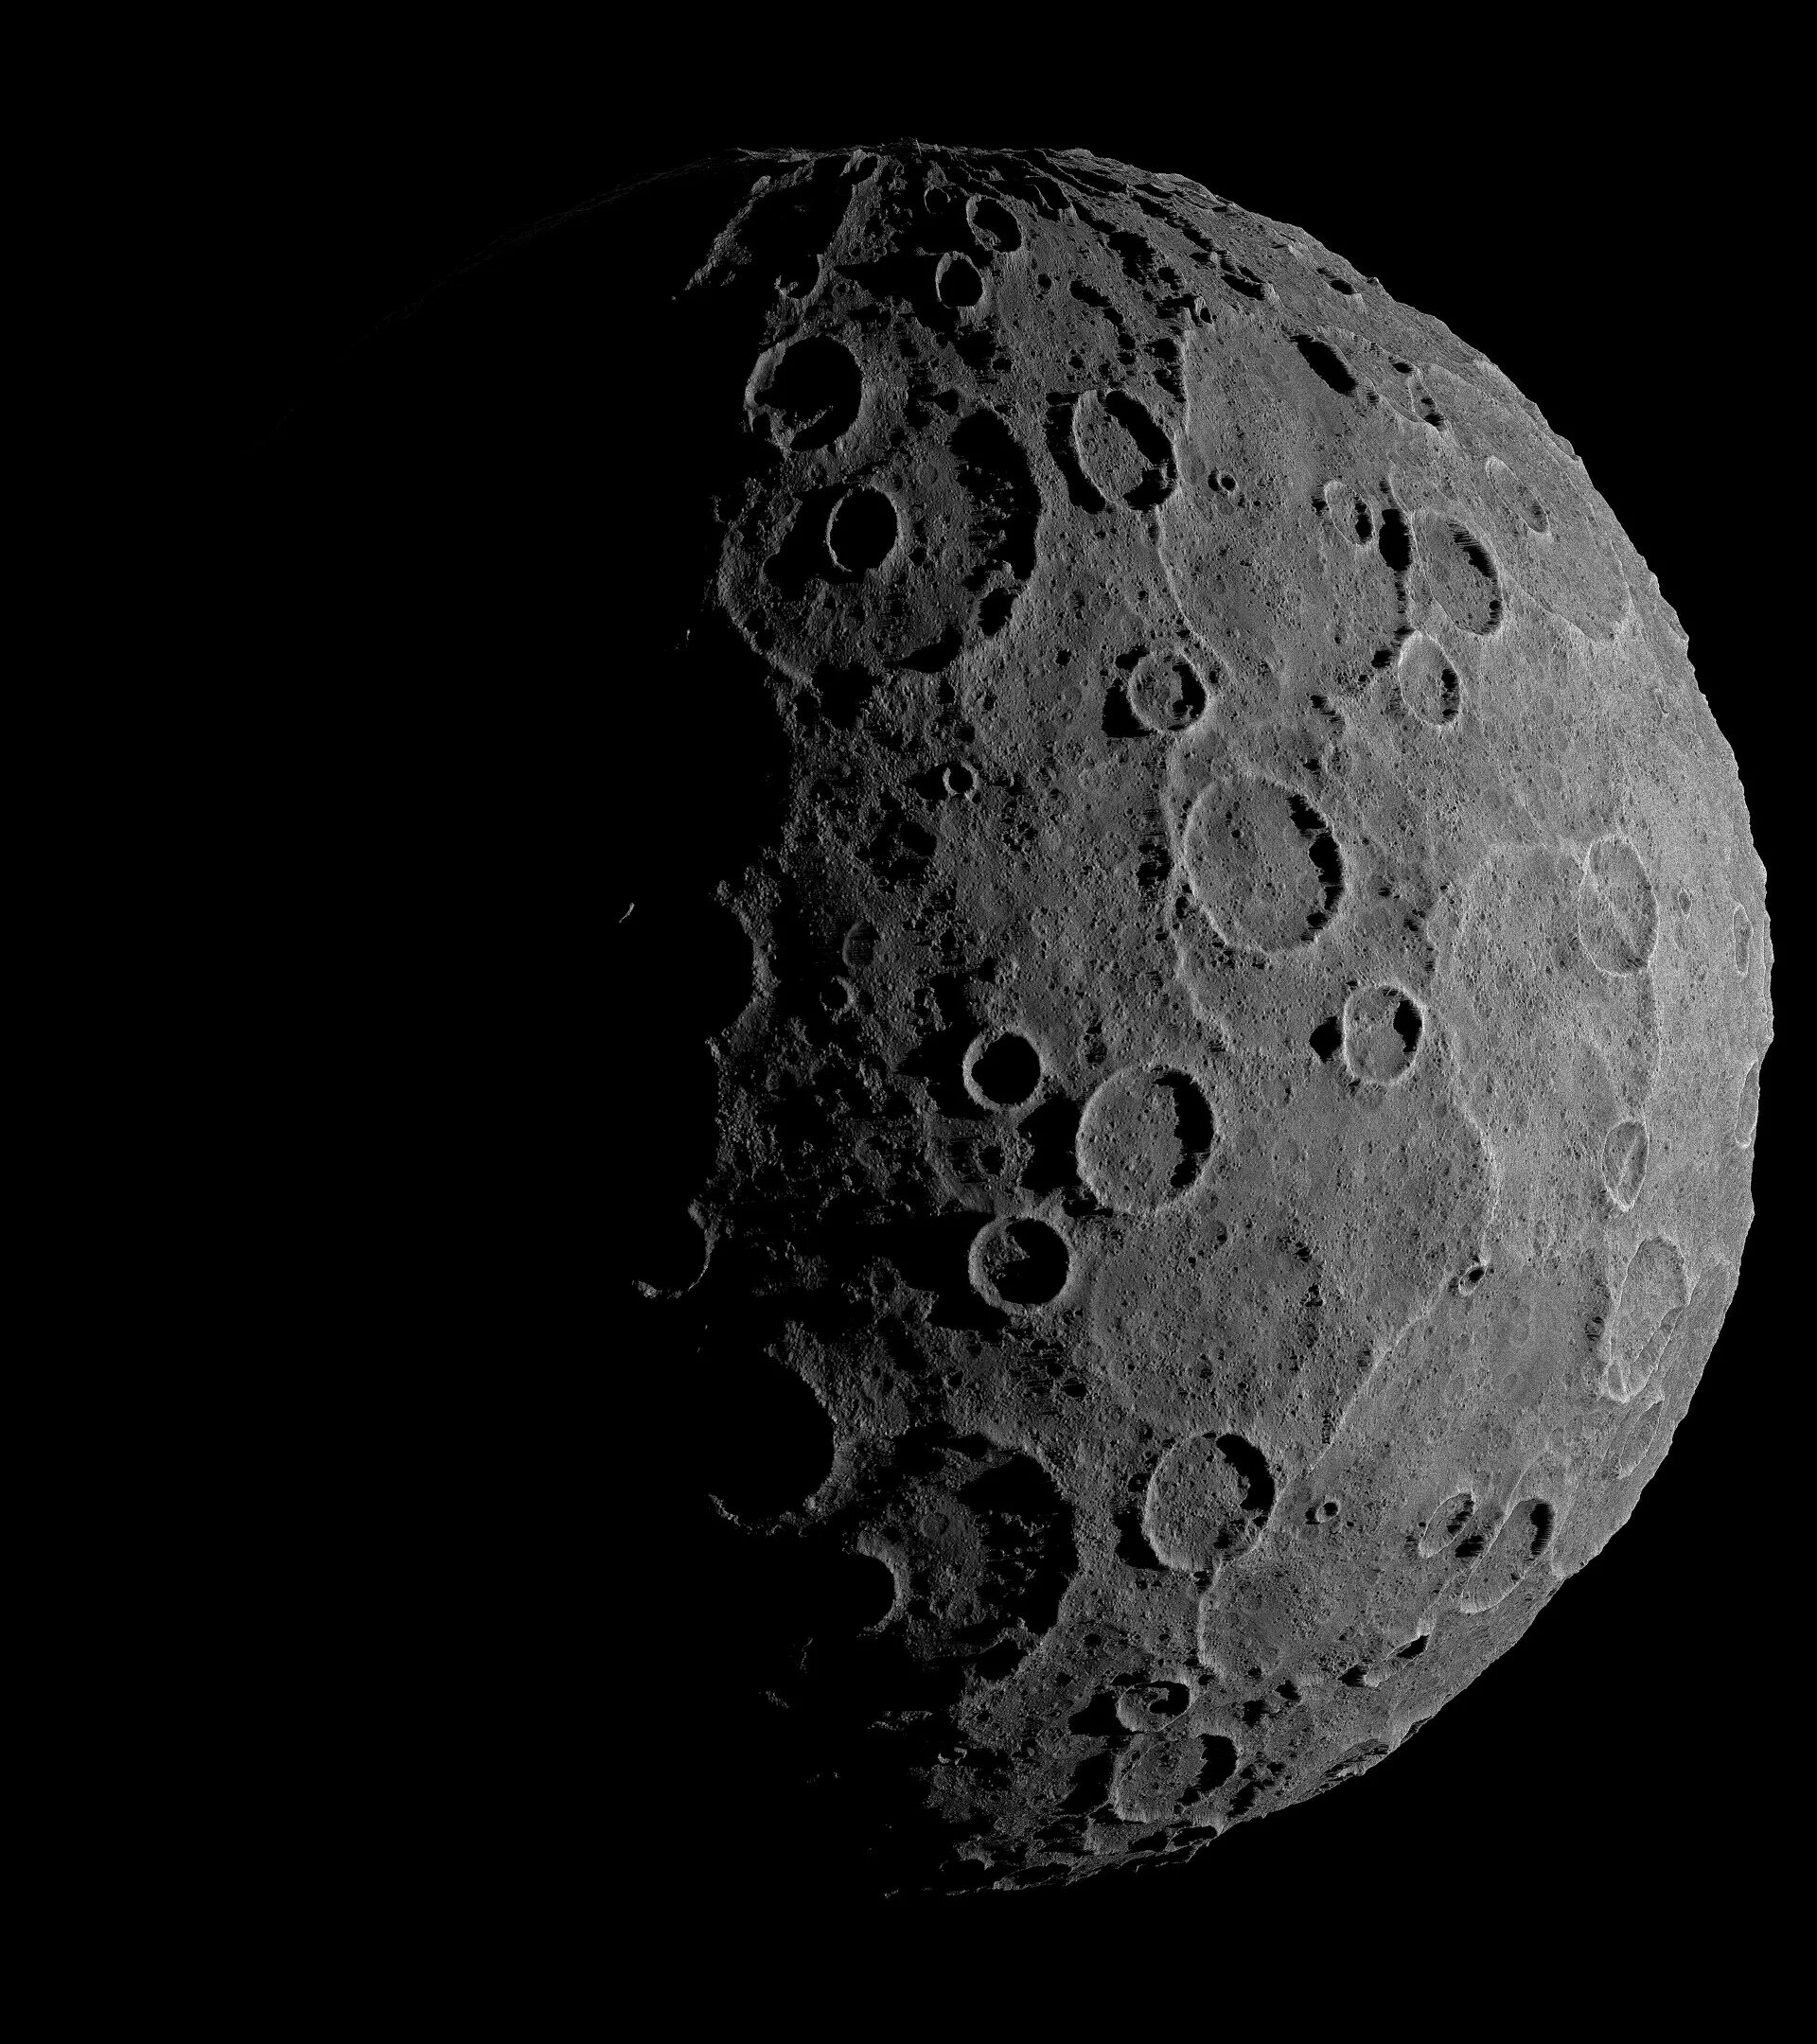 Кратеры на Луне. Поверхность Луны кратеры. Лунный кратер Торричелли. Луна вблизи. Луна поверхность кратеры